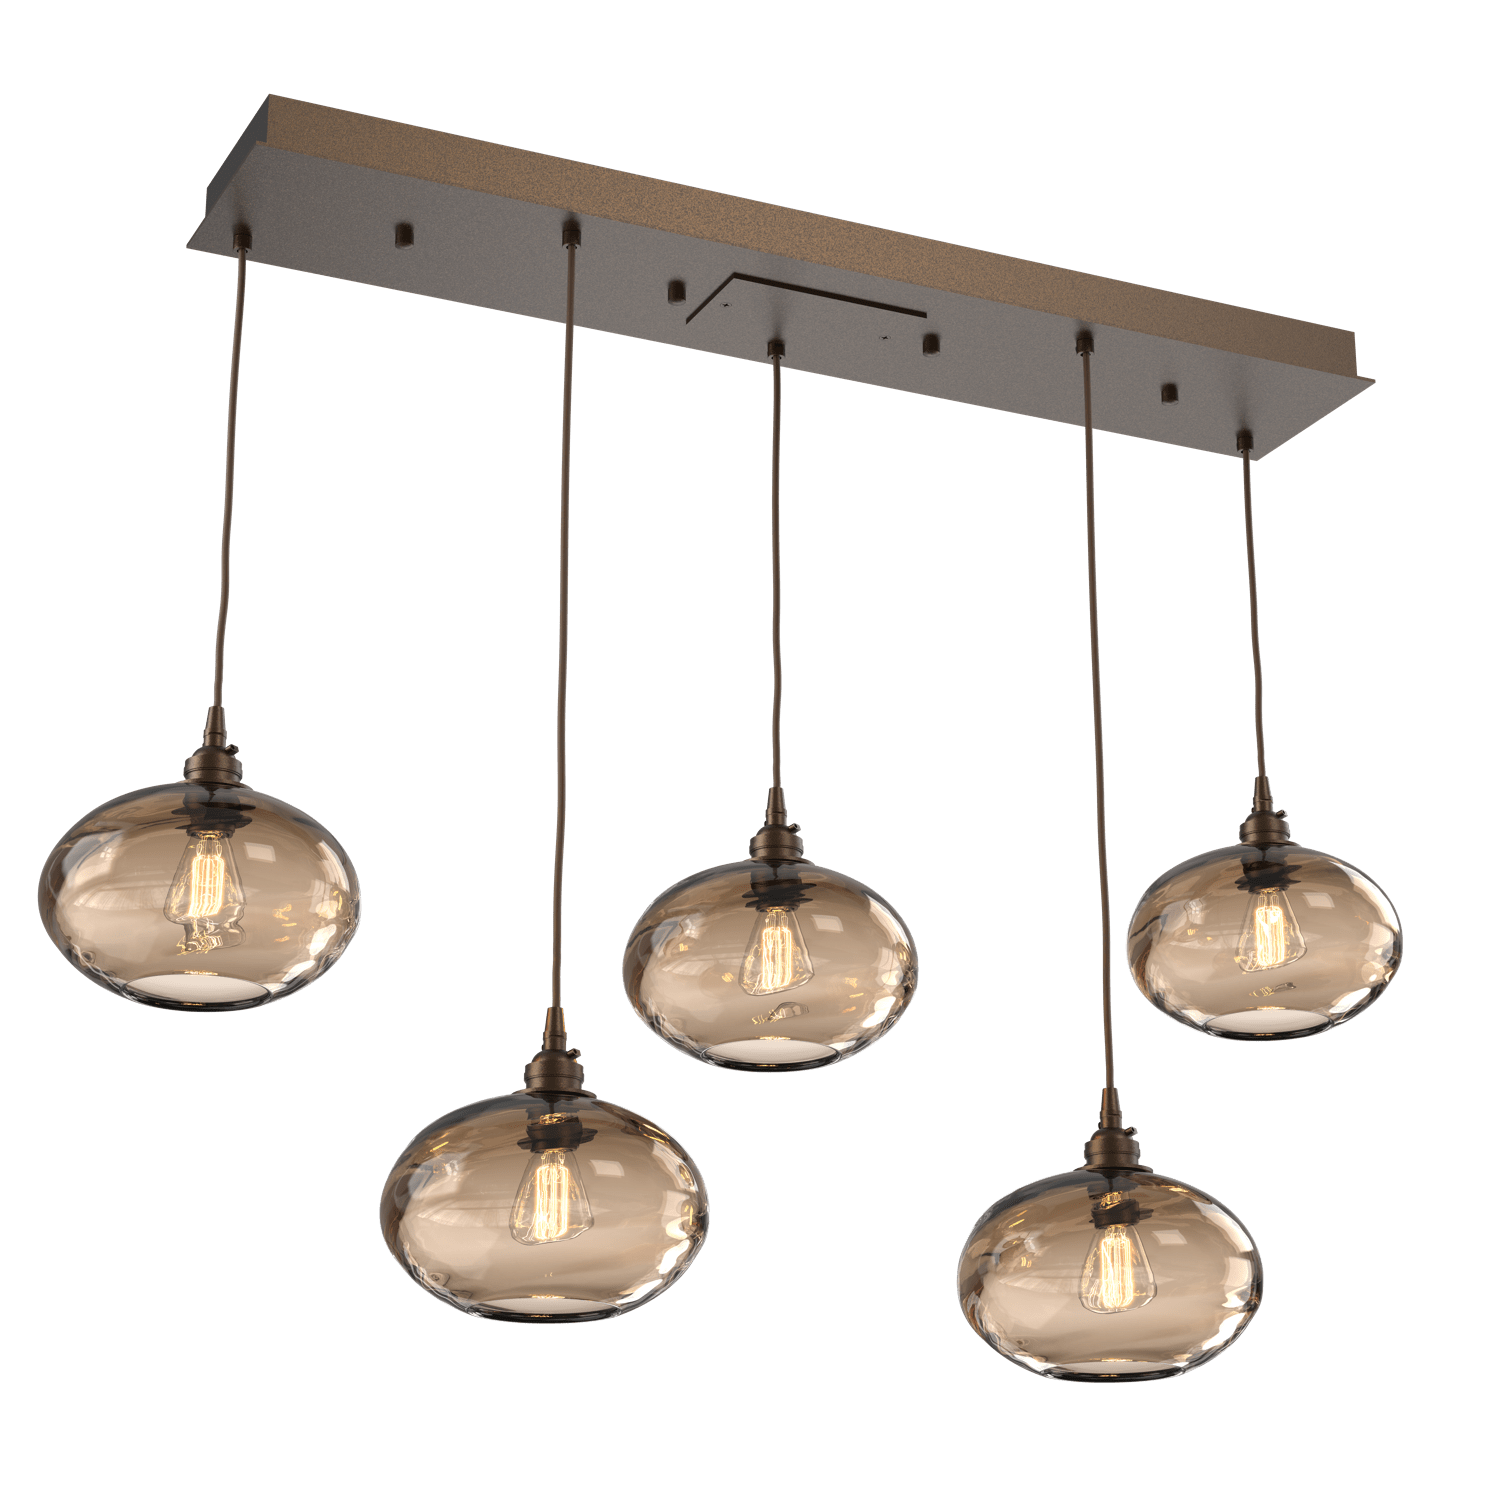 PLB0036-05-FB-OB-Hammerton-Studio-Optic-Blown-Glass-Coppa-5-light-linear-pendant-chandelier-with-flat-bronze-finish-and-optic-bronze-blown-glass-shades-and-incandescent-lamping